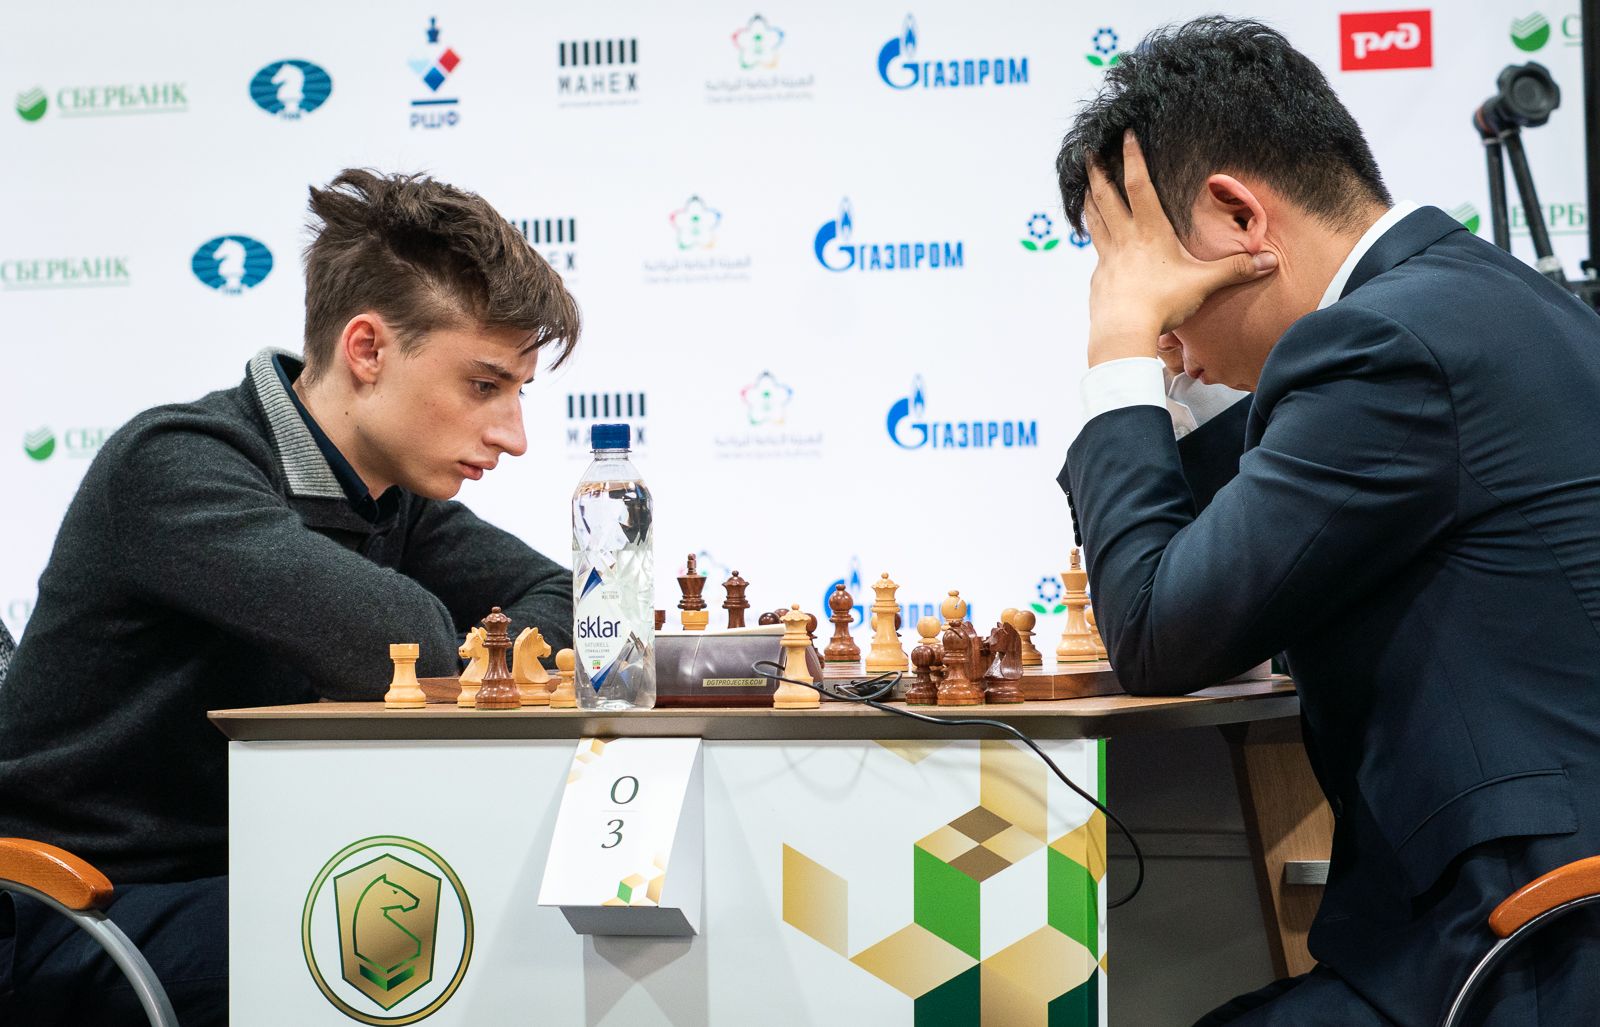 Alireza Firouzja on the best performance of his chess career - silver at  World Rapid 2019